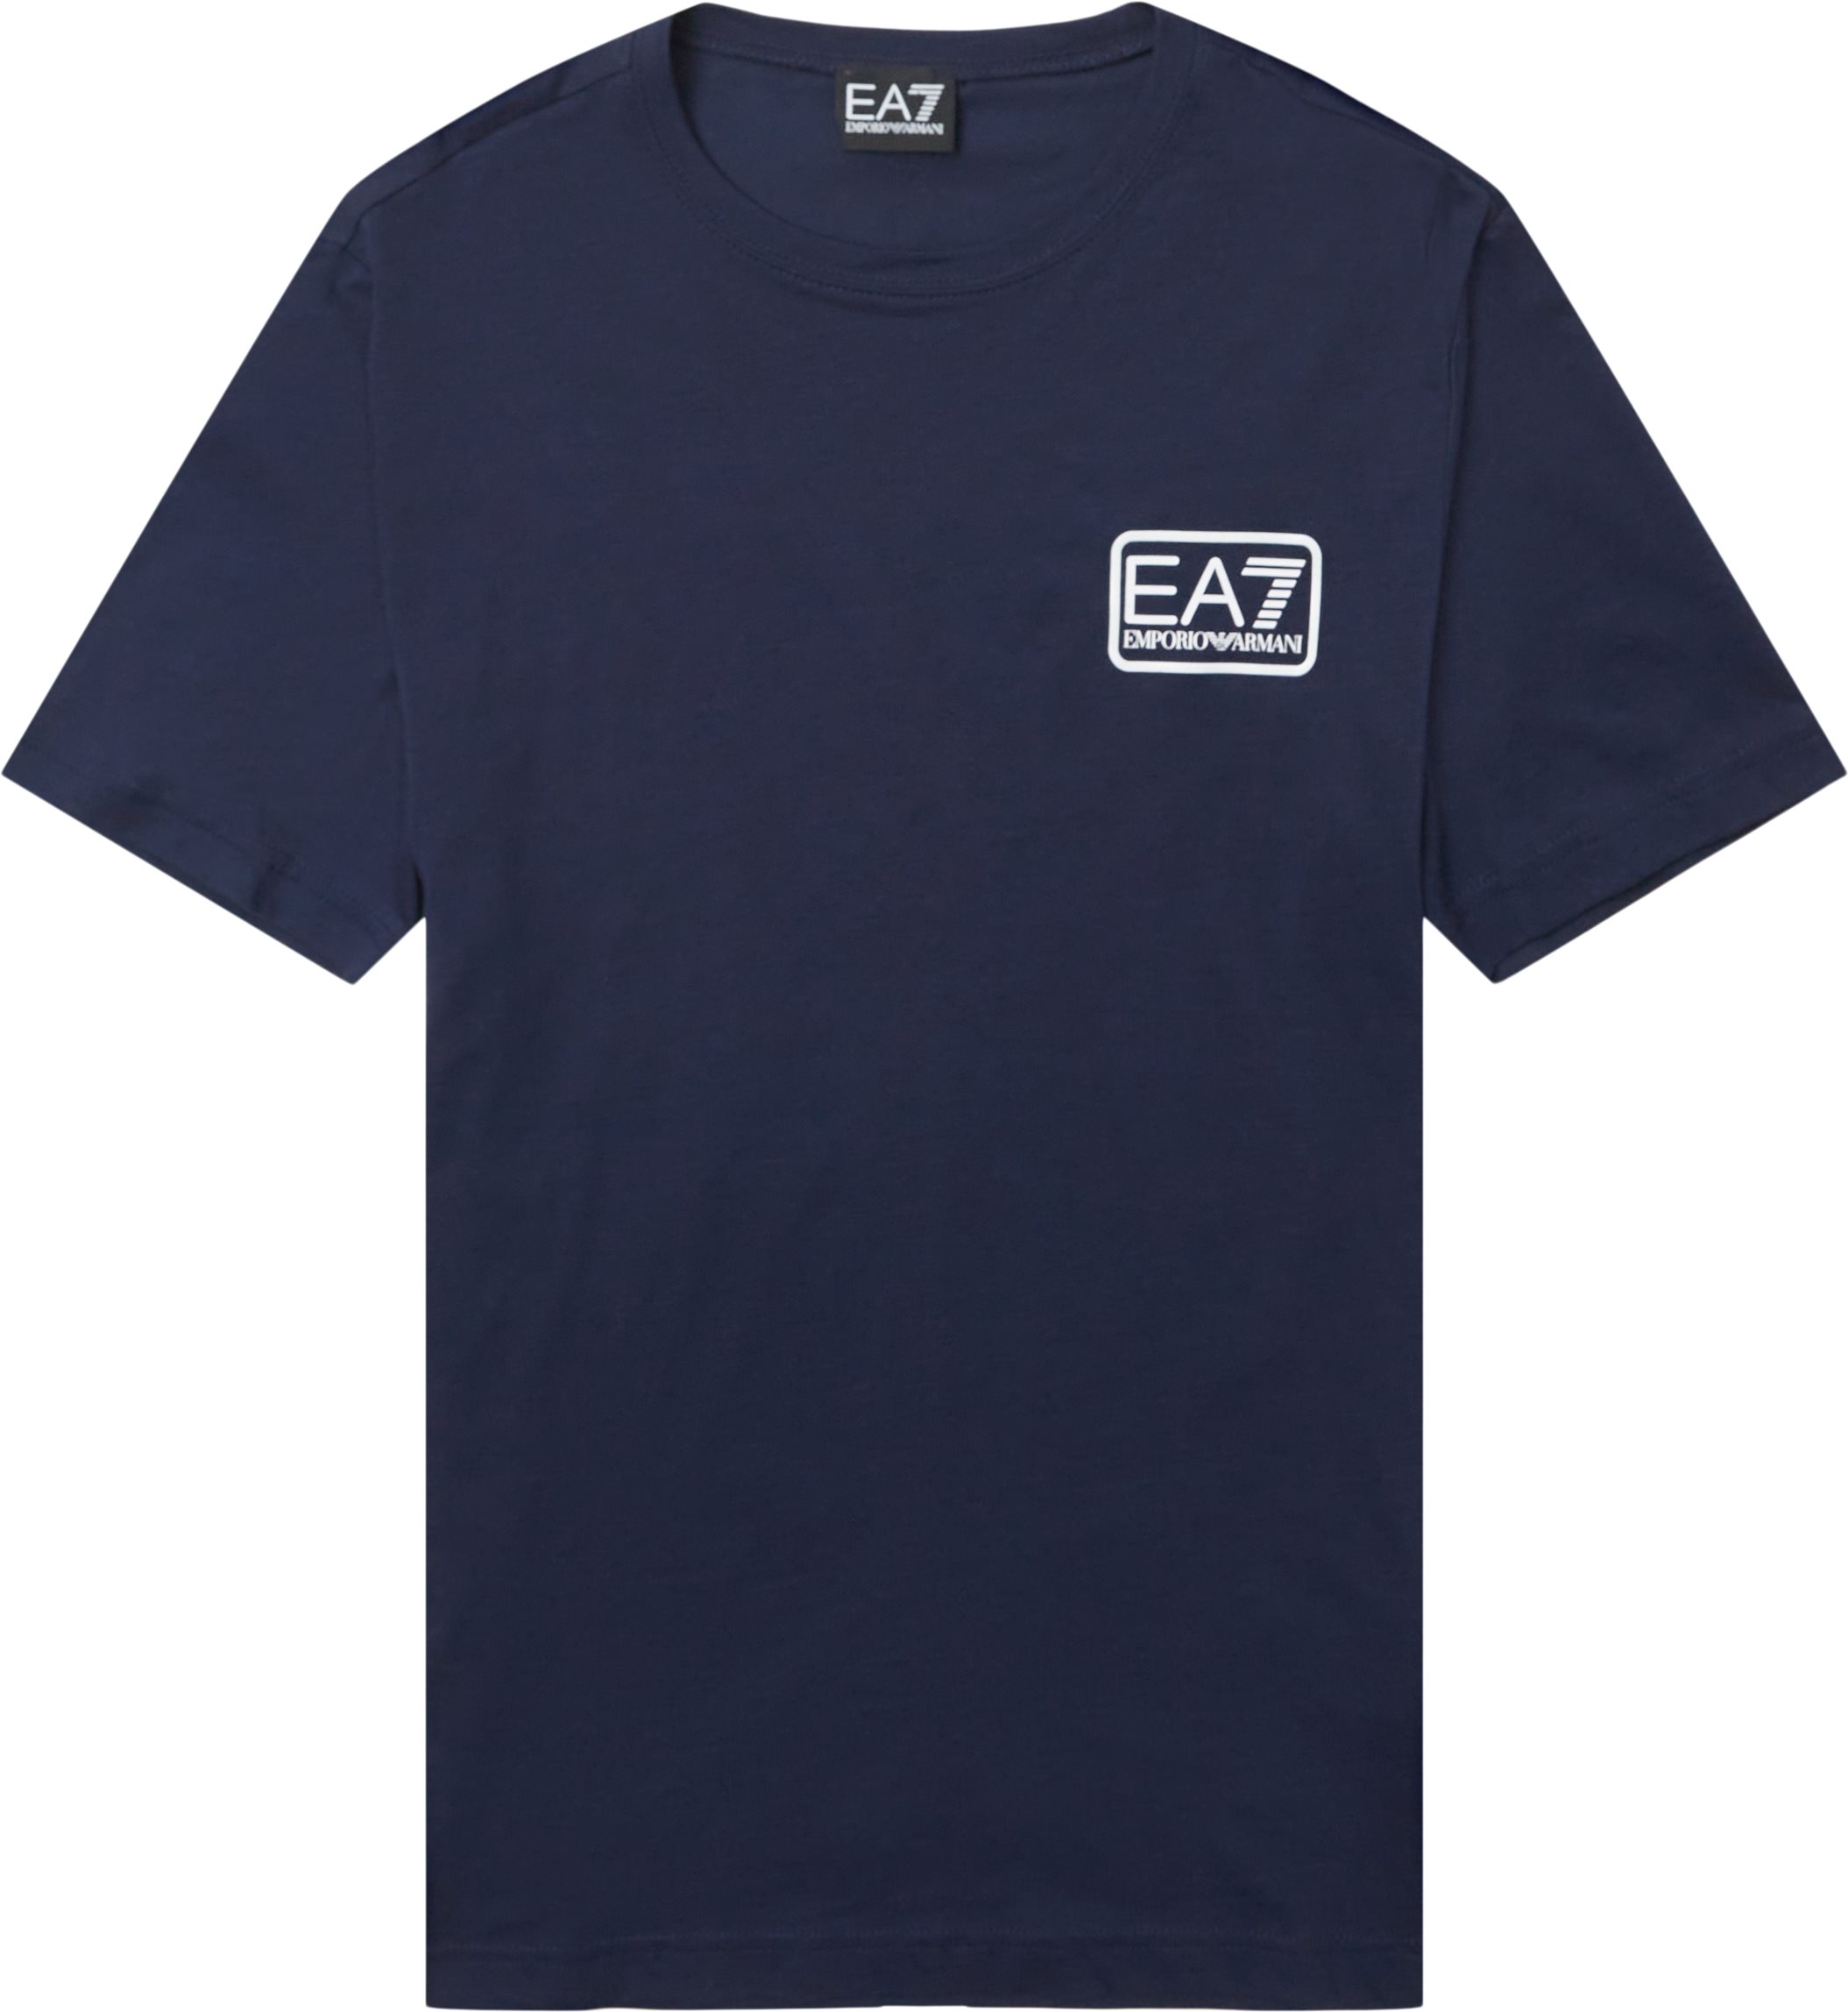 Pjm9z-3lpt05 - T-shirts - Regular fit - Blå